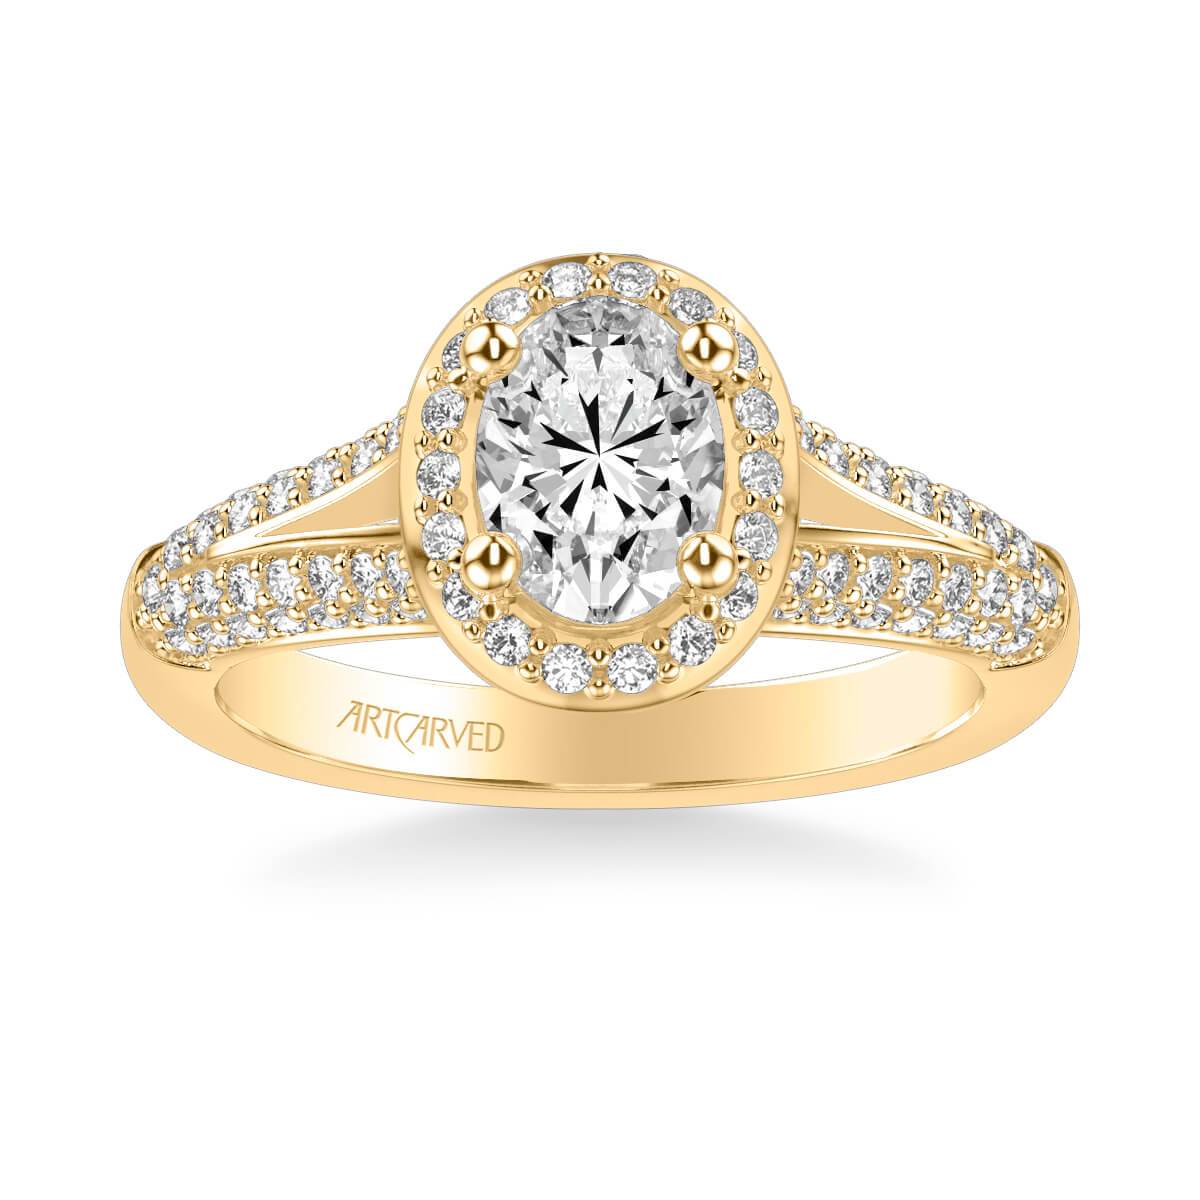 Ariel Classic Oval Halo Diamond Engagement Ring